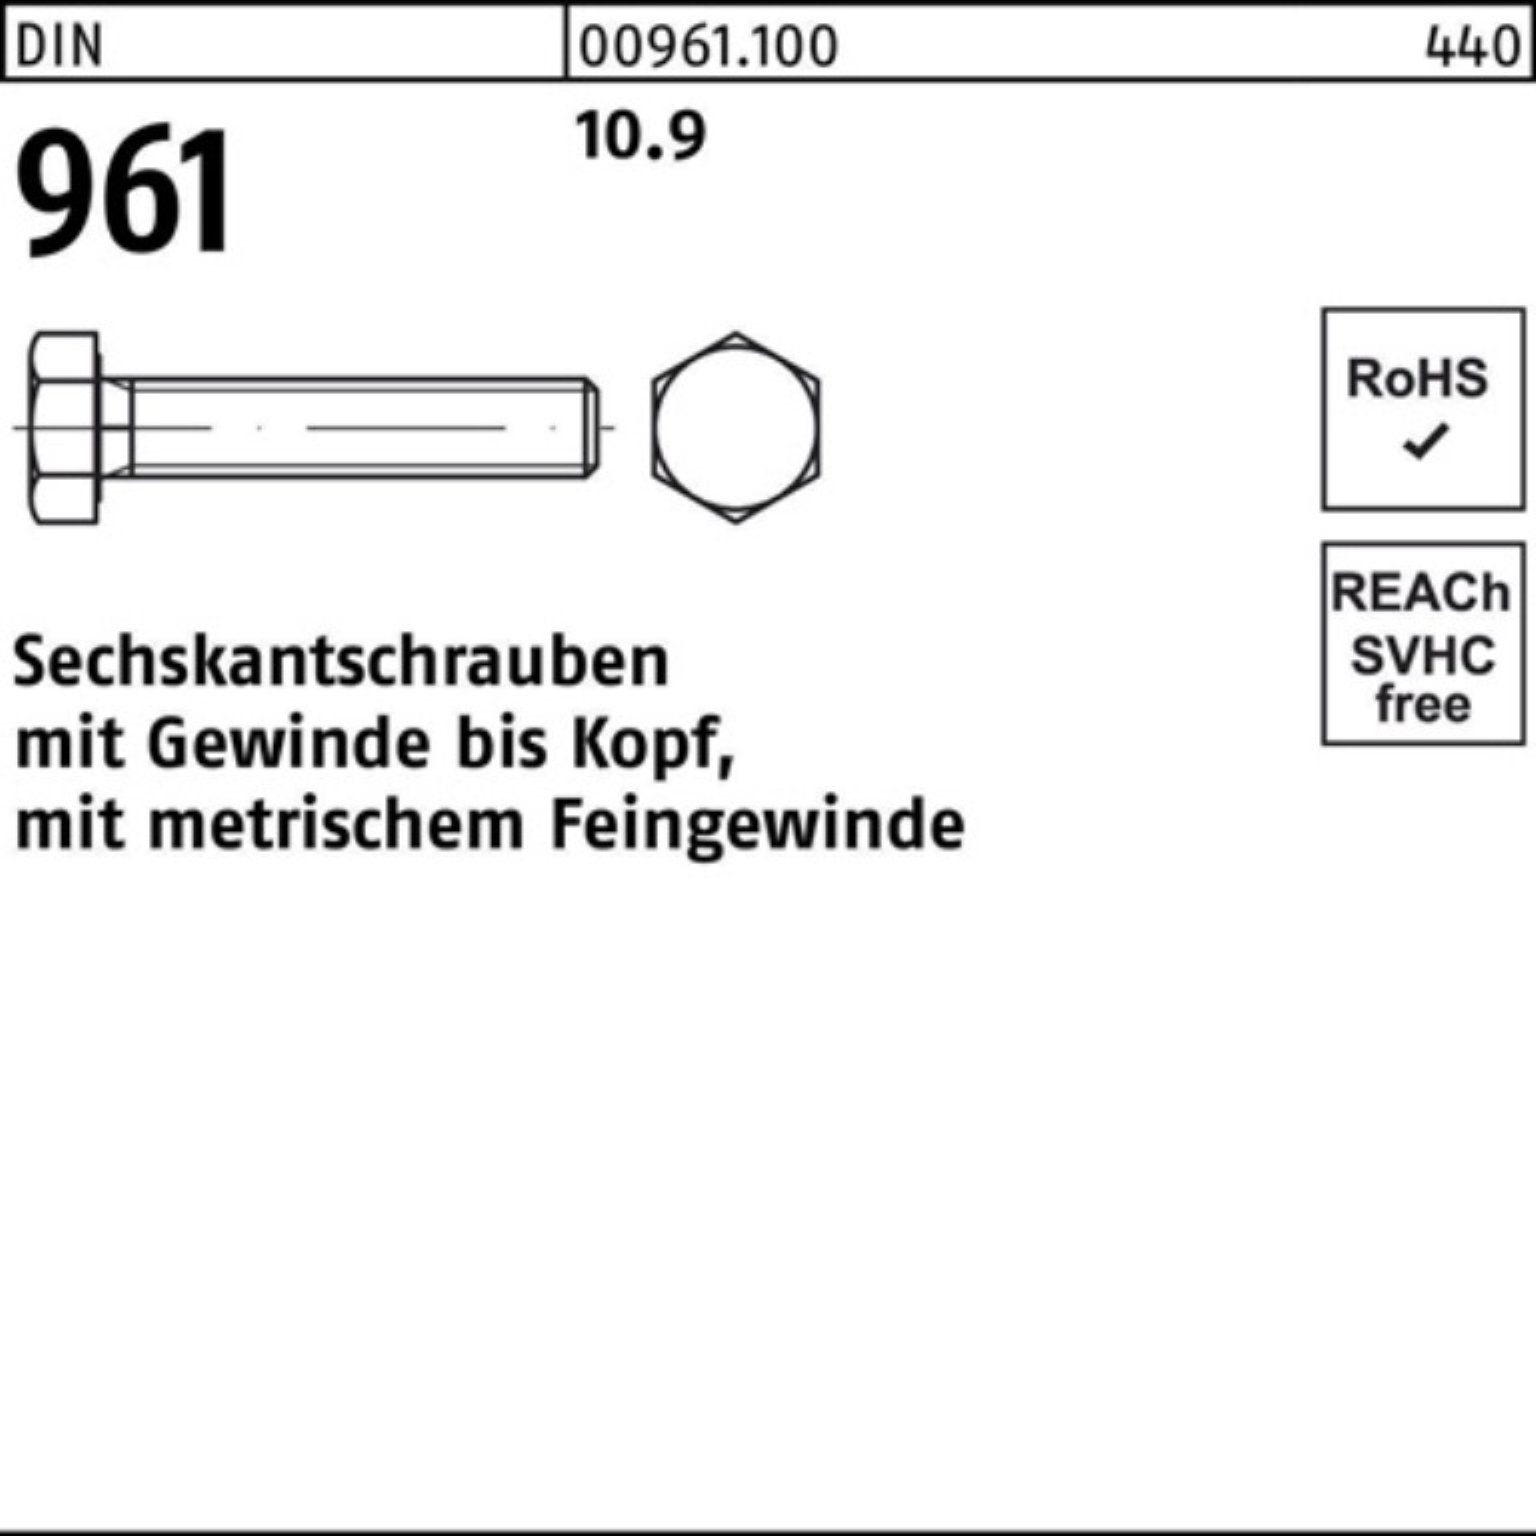 Reyher Sechskantschraube 100er Pack Sechskantschraube 10.9 100 VG 40 DIN Stück 961 DI M12x1,5x